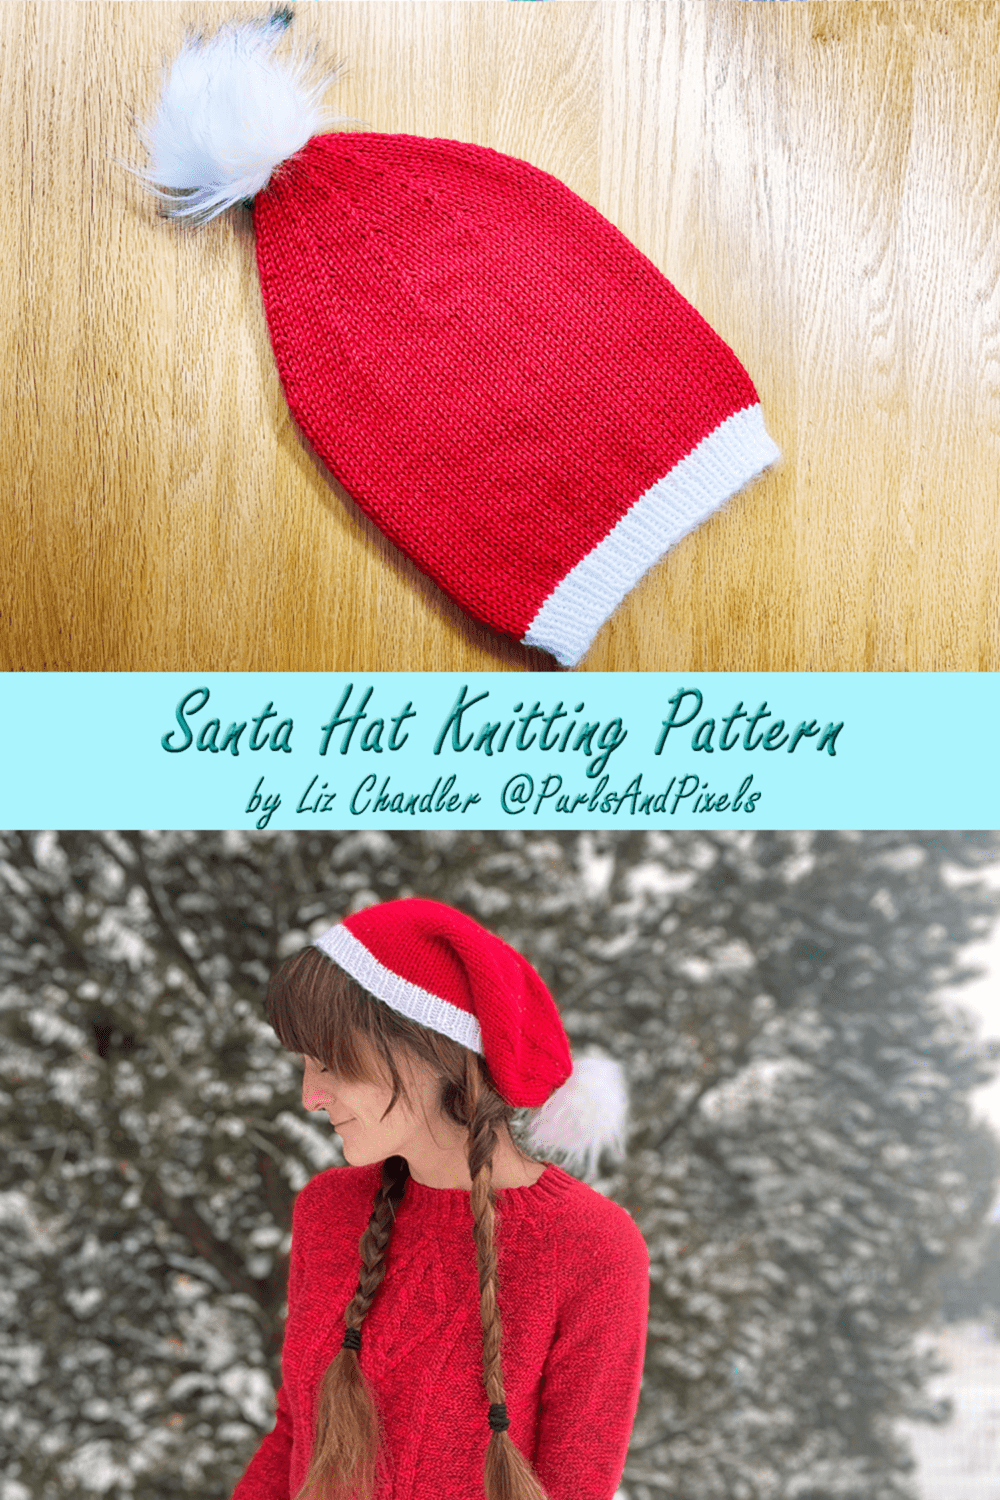 Santa Hat knitting pattern from Liz Chandler @PurlsAndPixels